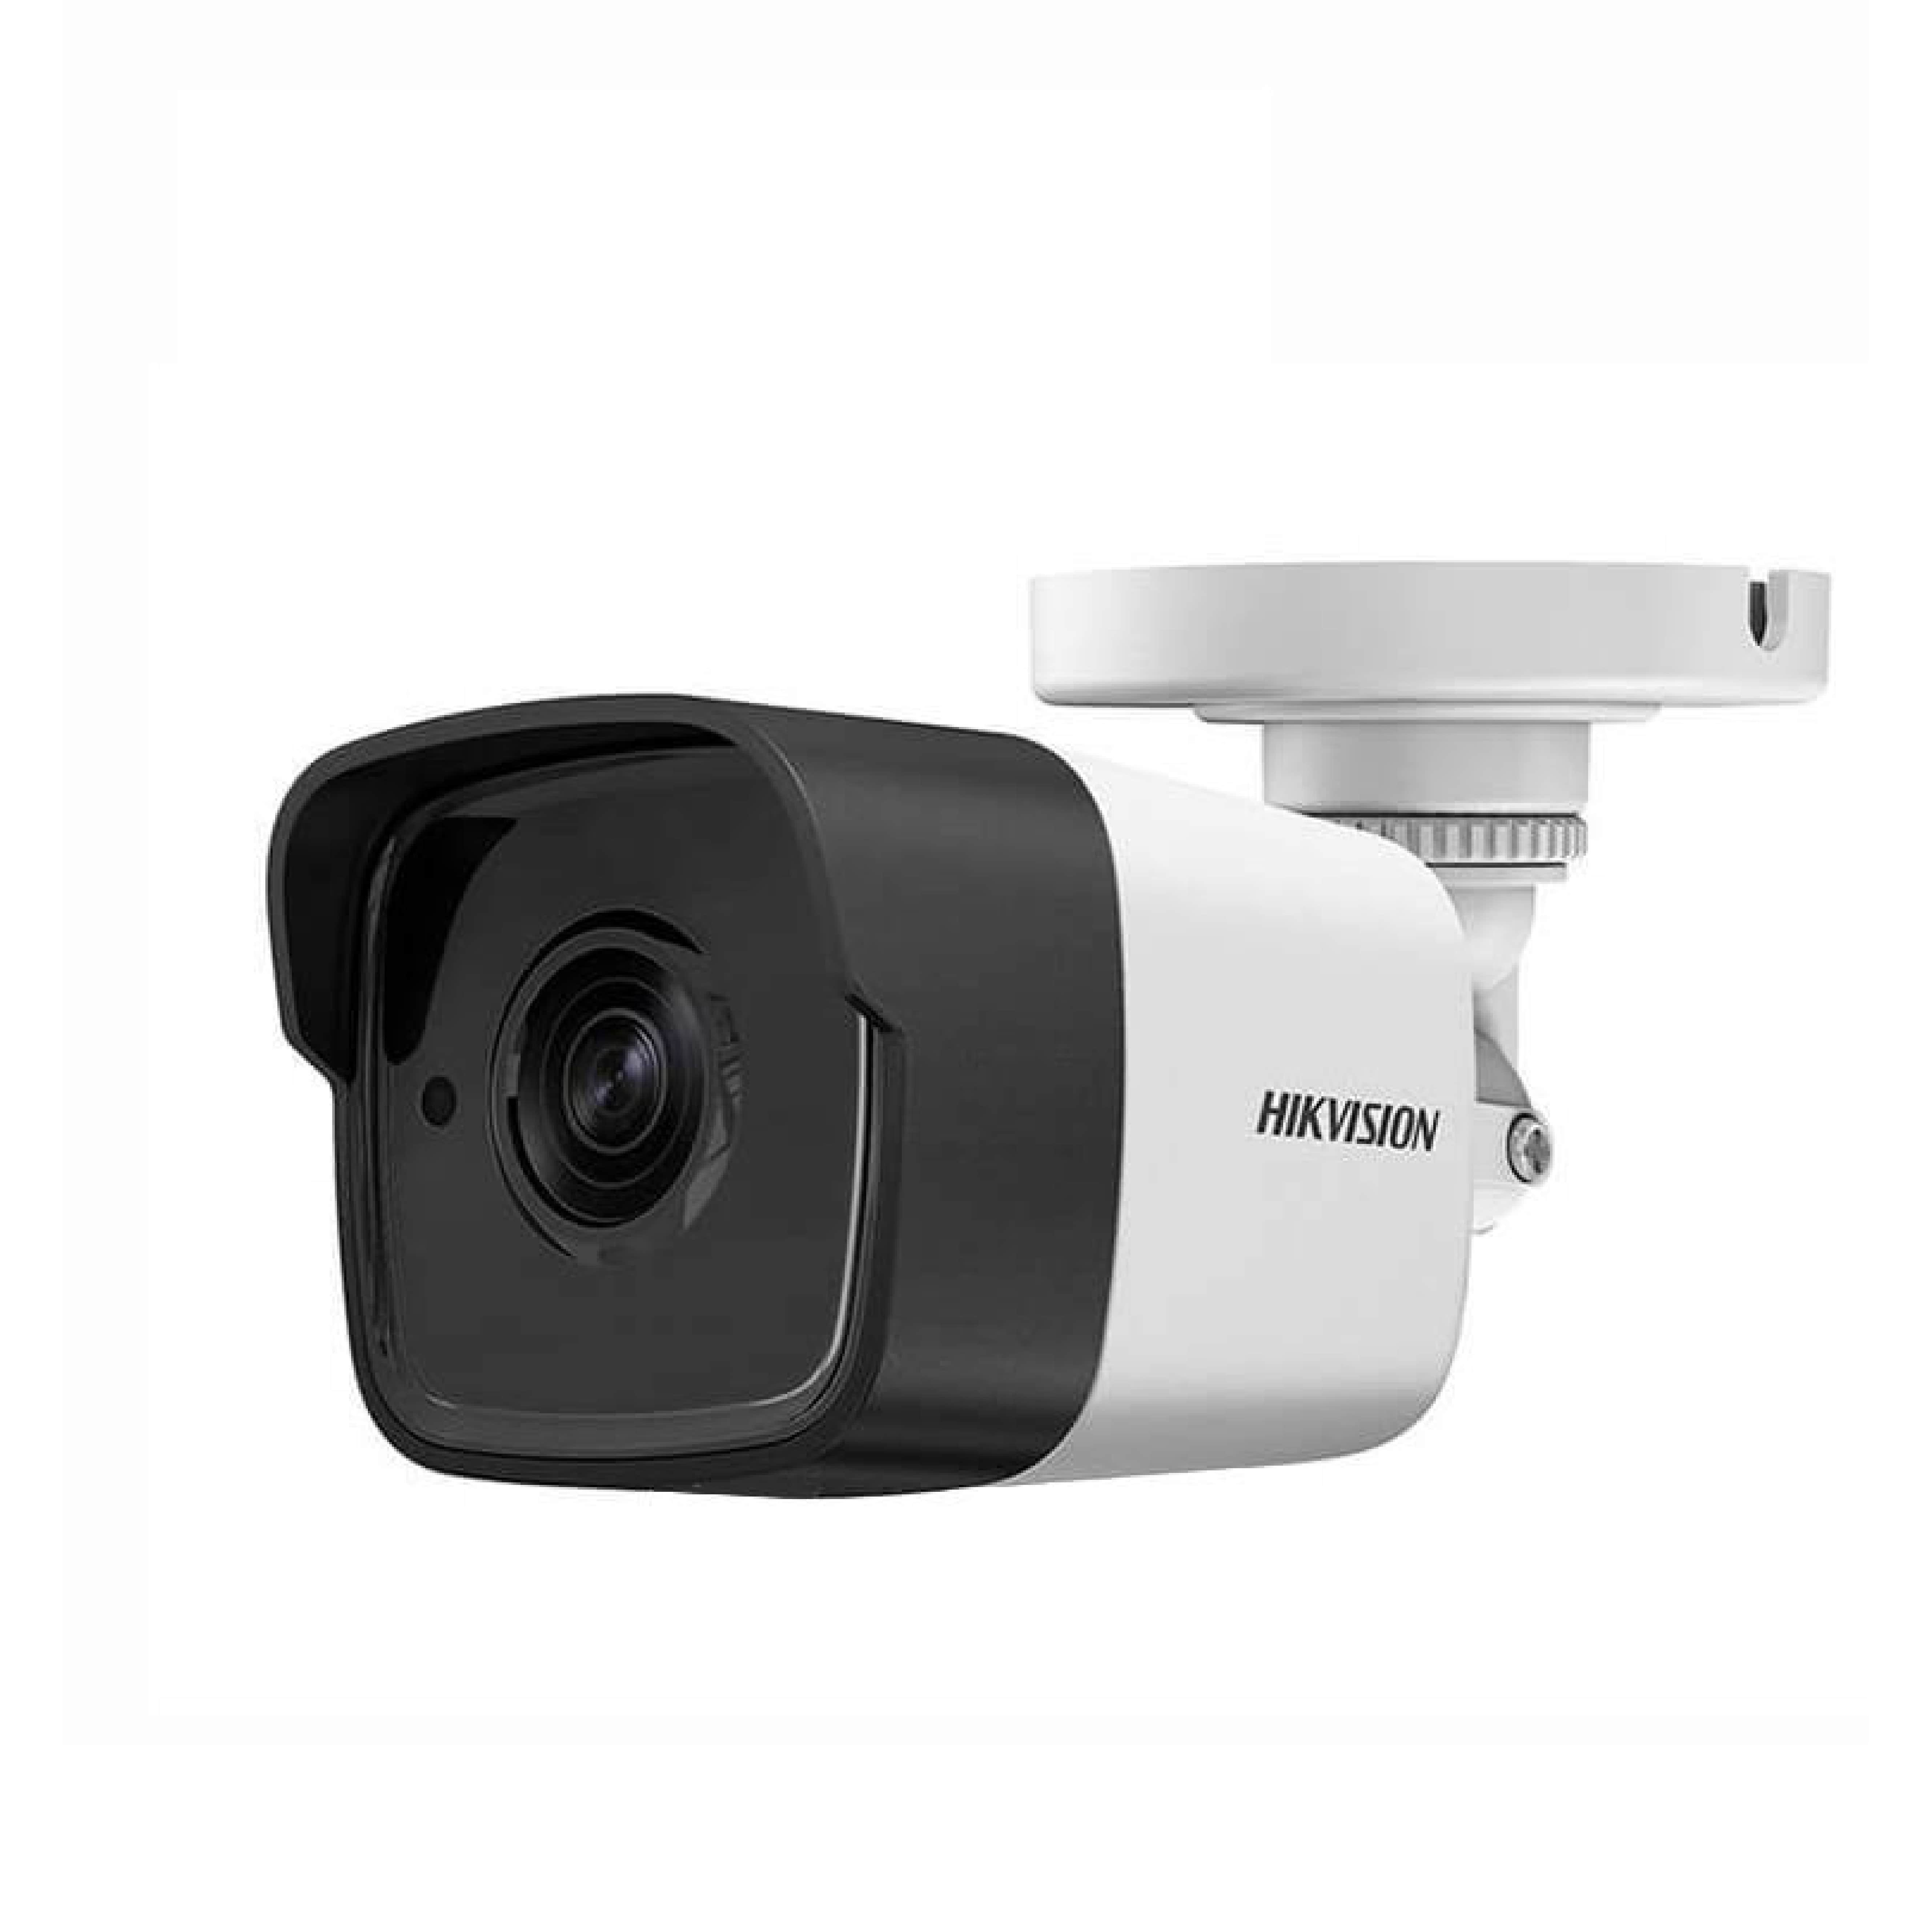 Camera đồng trục Hikvision DS-2CE16F1T-IT 3.0 Mpx lắp ngoài trời